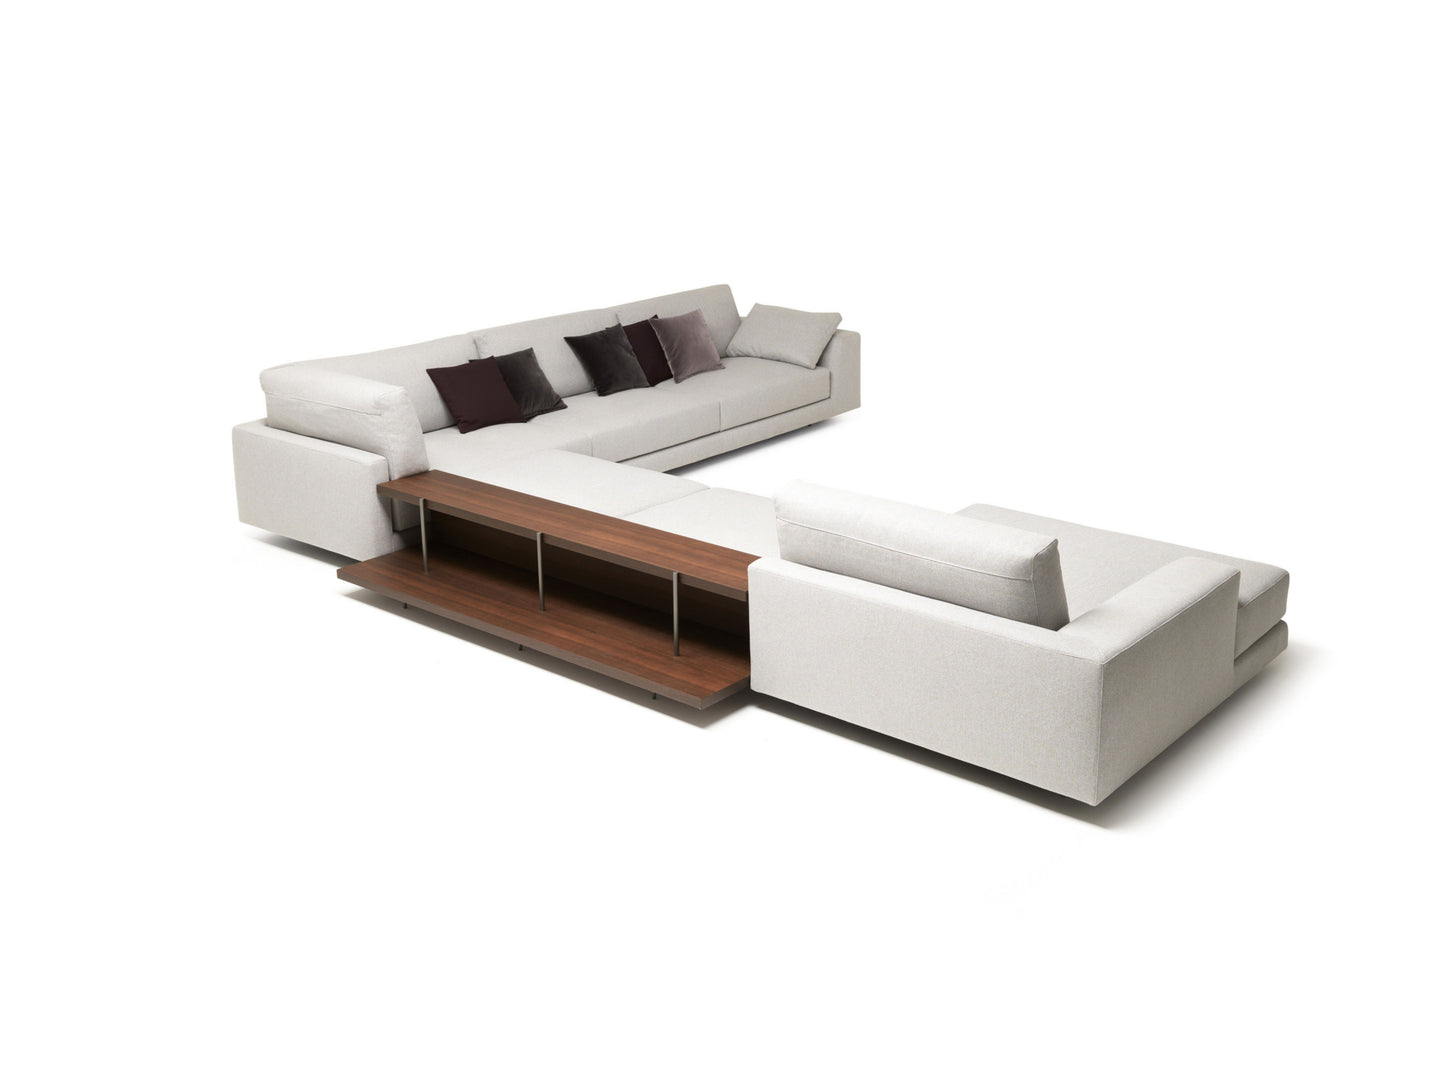 ARGO | Sofa with integrated magazine rack by MisuraEmme